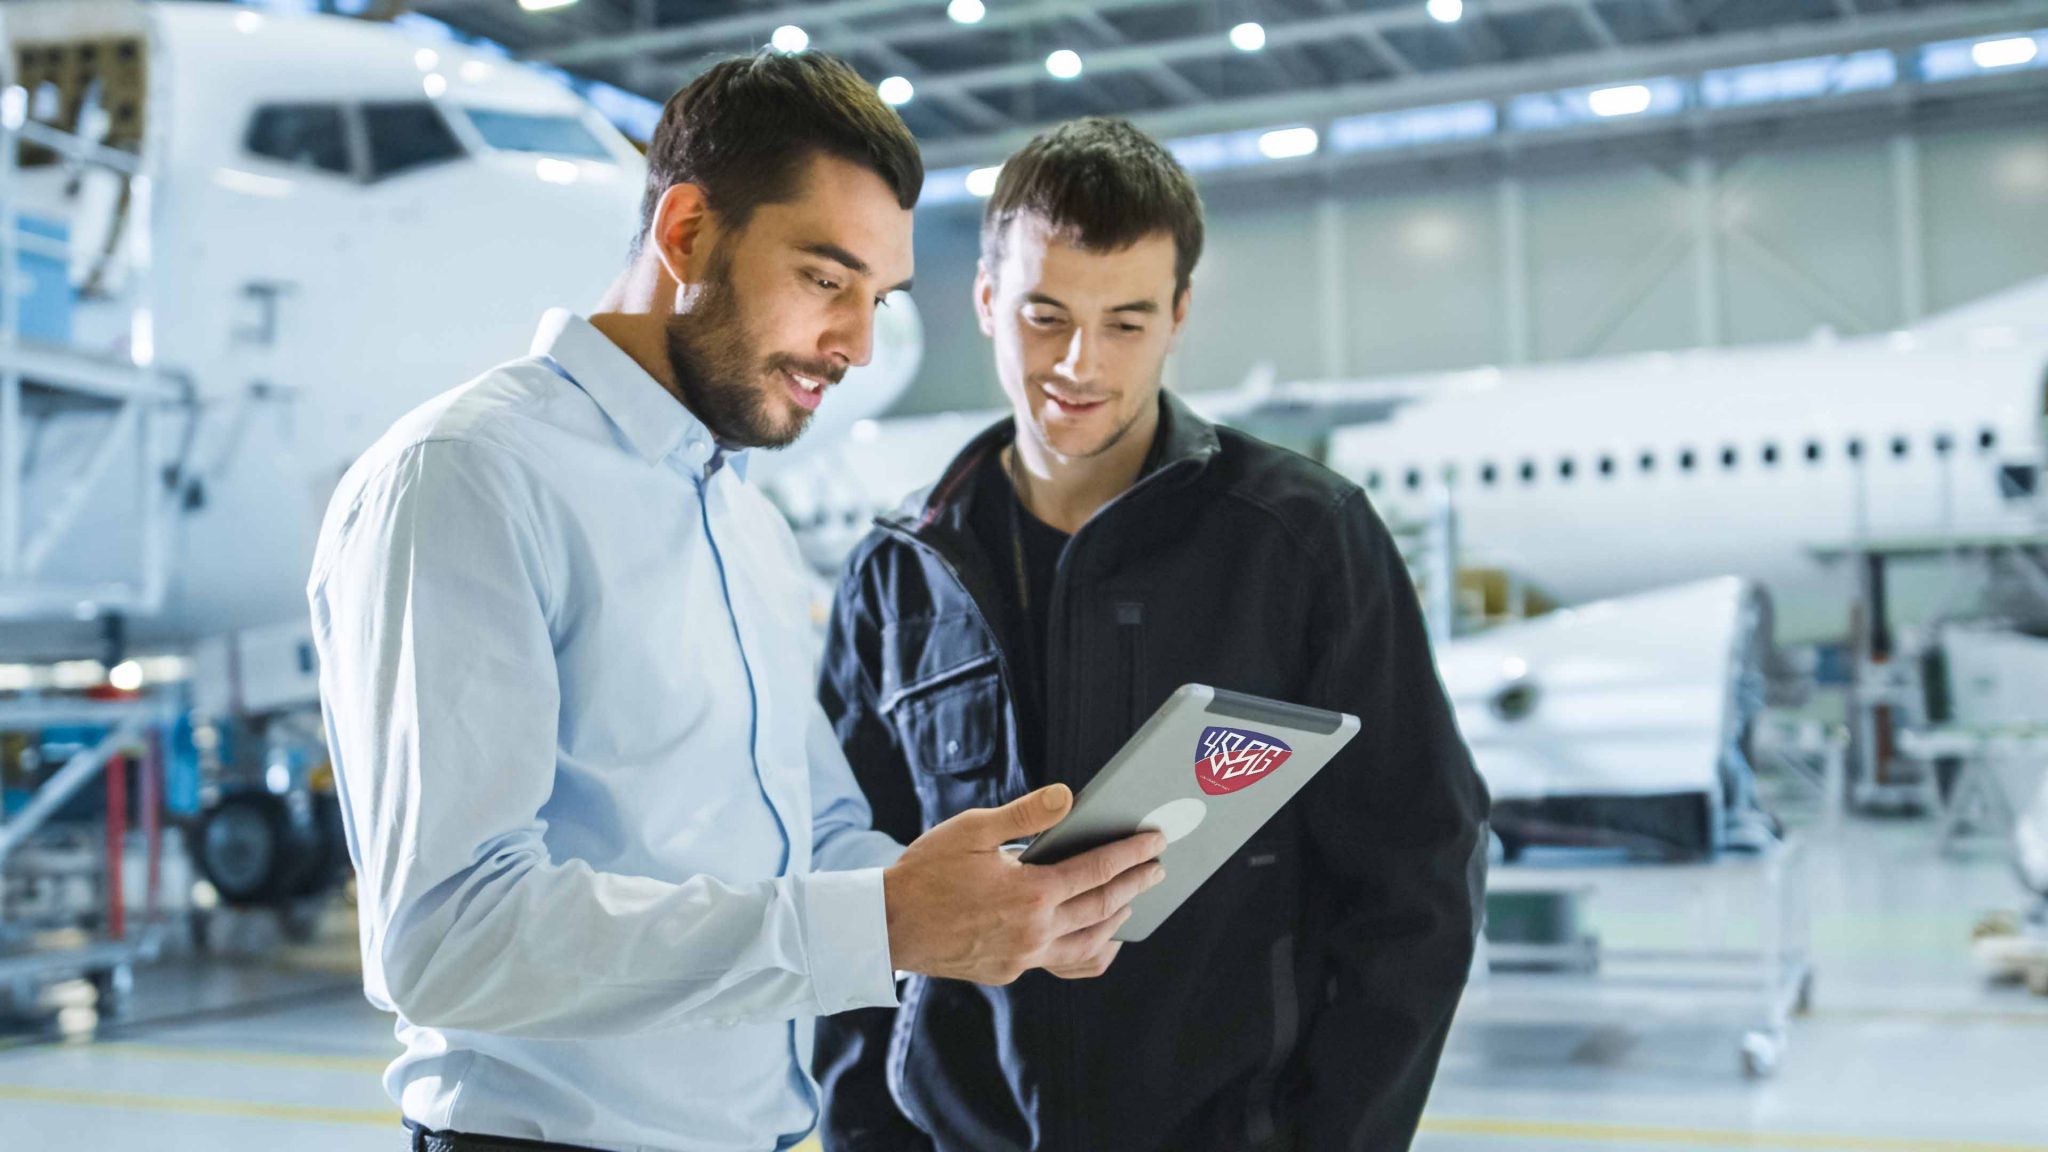 4SSG UK Ltd Aircraft Maintenance Worker and Engineer having Conversation. Holding Tablet.